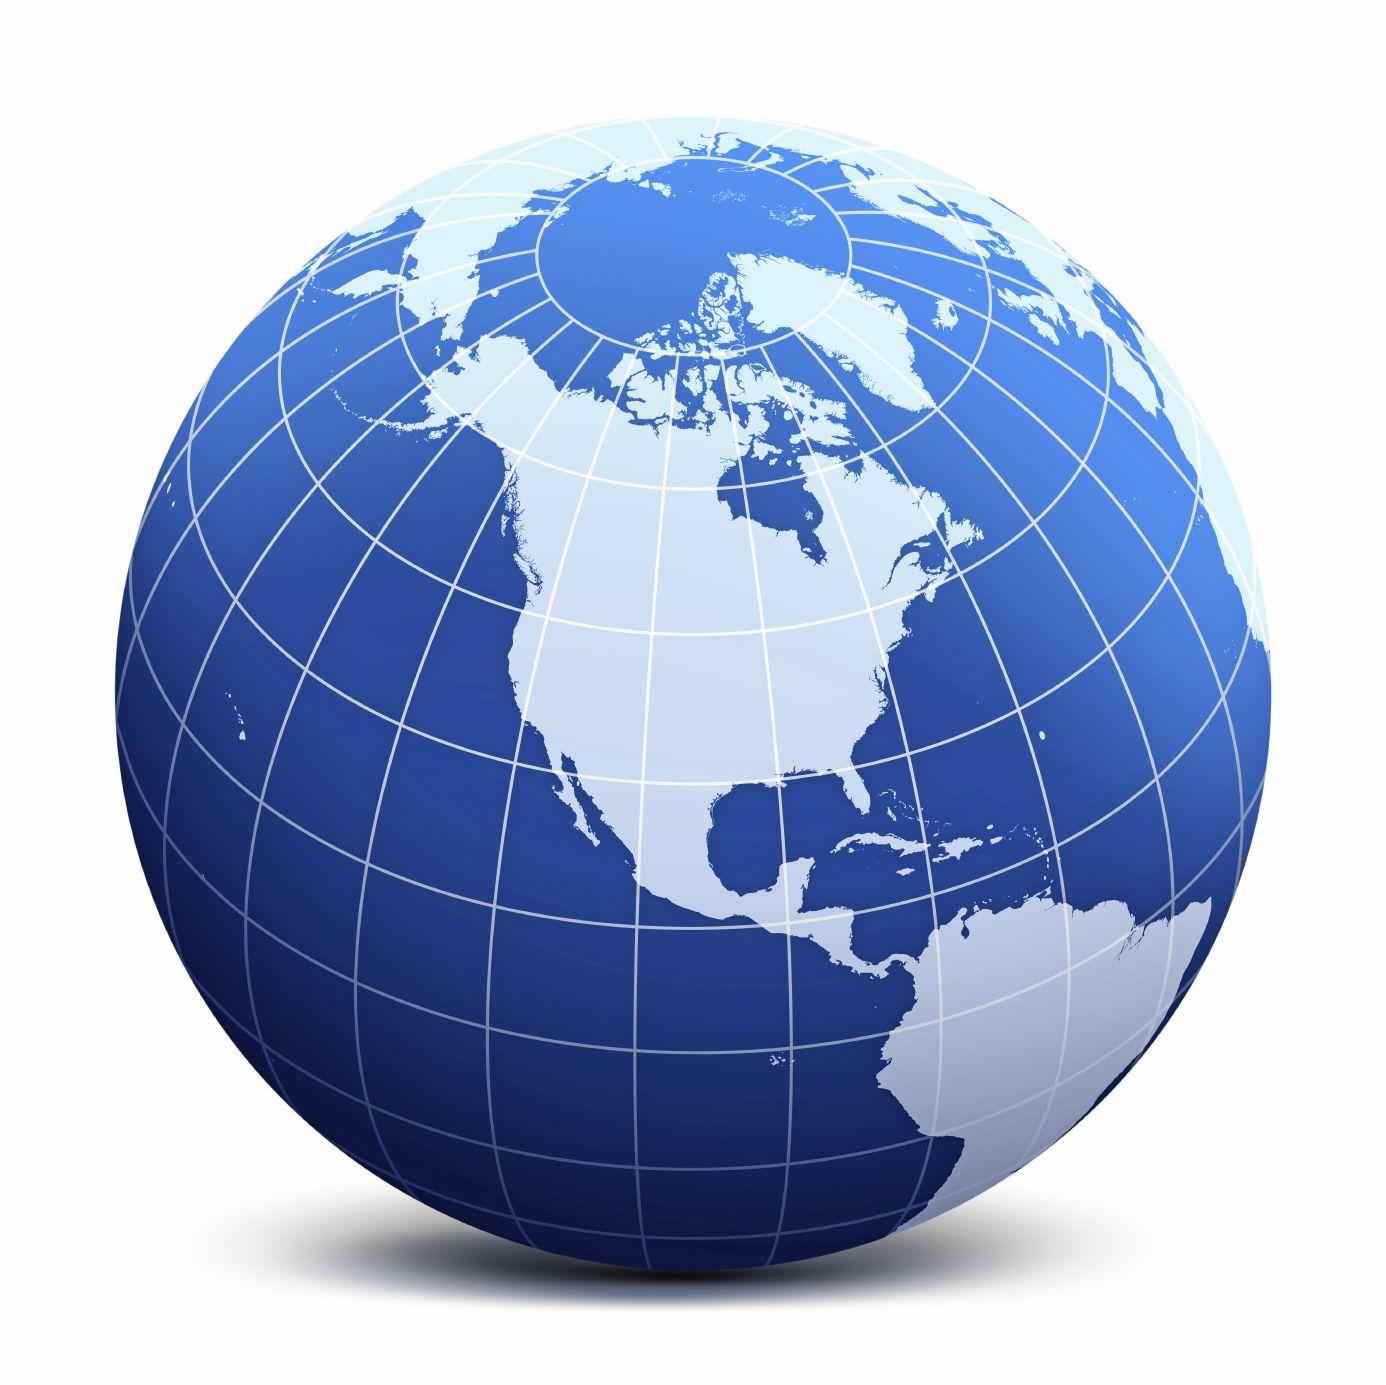 World Globe Logo - Best Photos of World Globe Logo - World Globe, World Globe Graphics ...